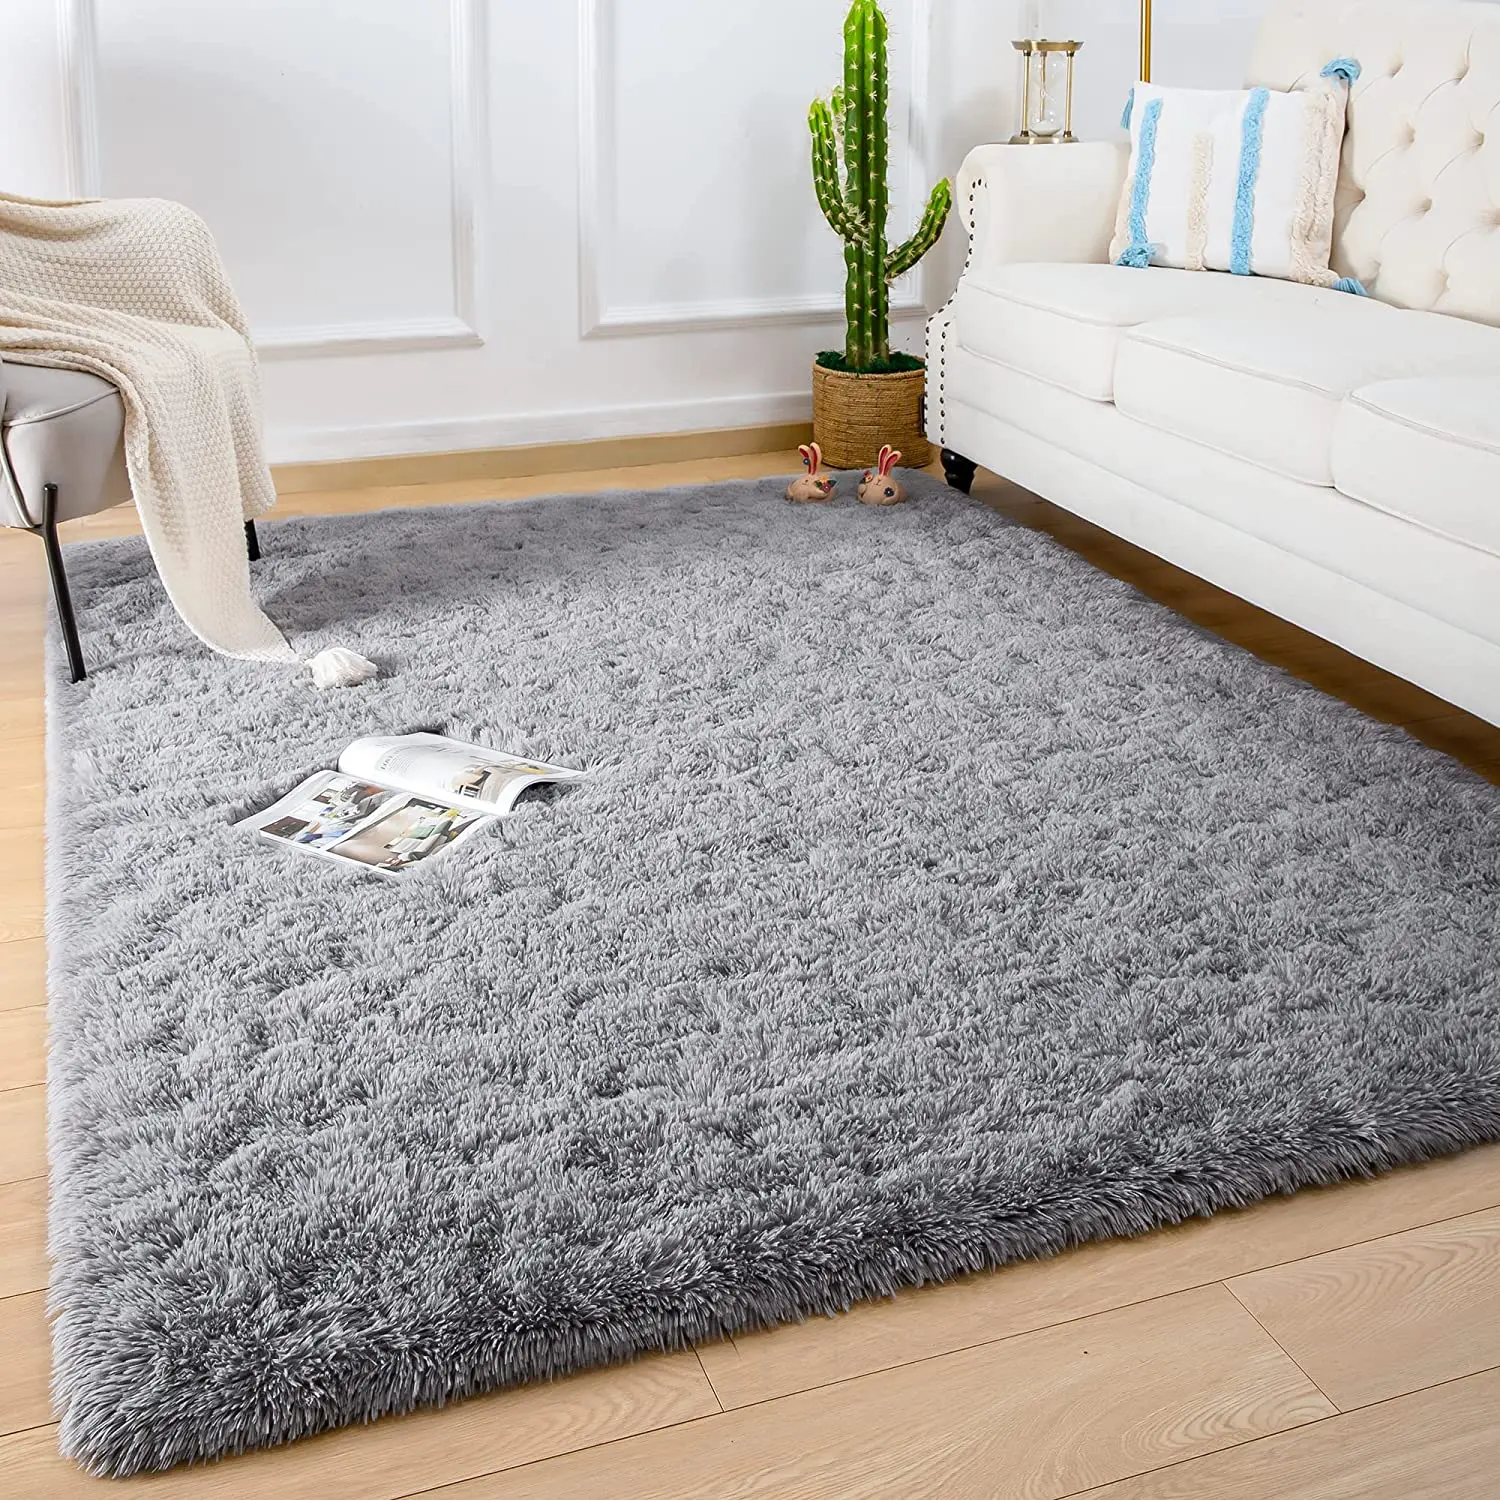 

Shag Area Rugs for Bedroom Grey Fluffy Rug Plush Living Room Carpet Indoor Modern Plush Area Rugs Fuzzy Nursery Shaggy Carpet